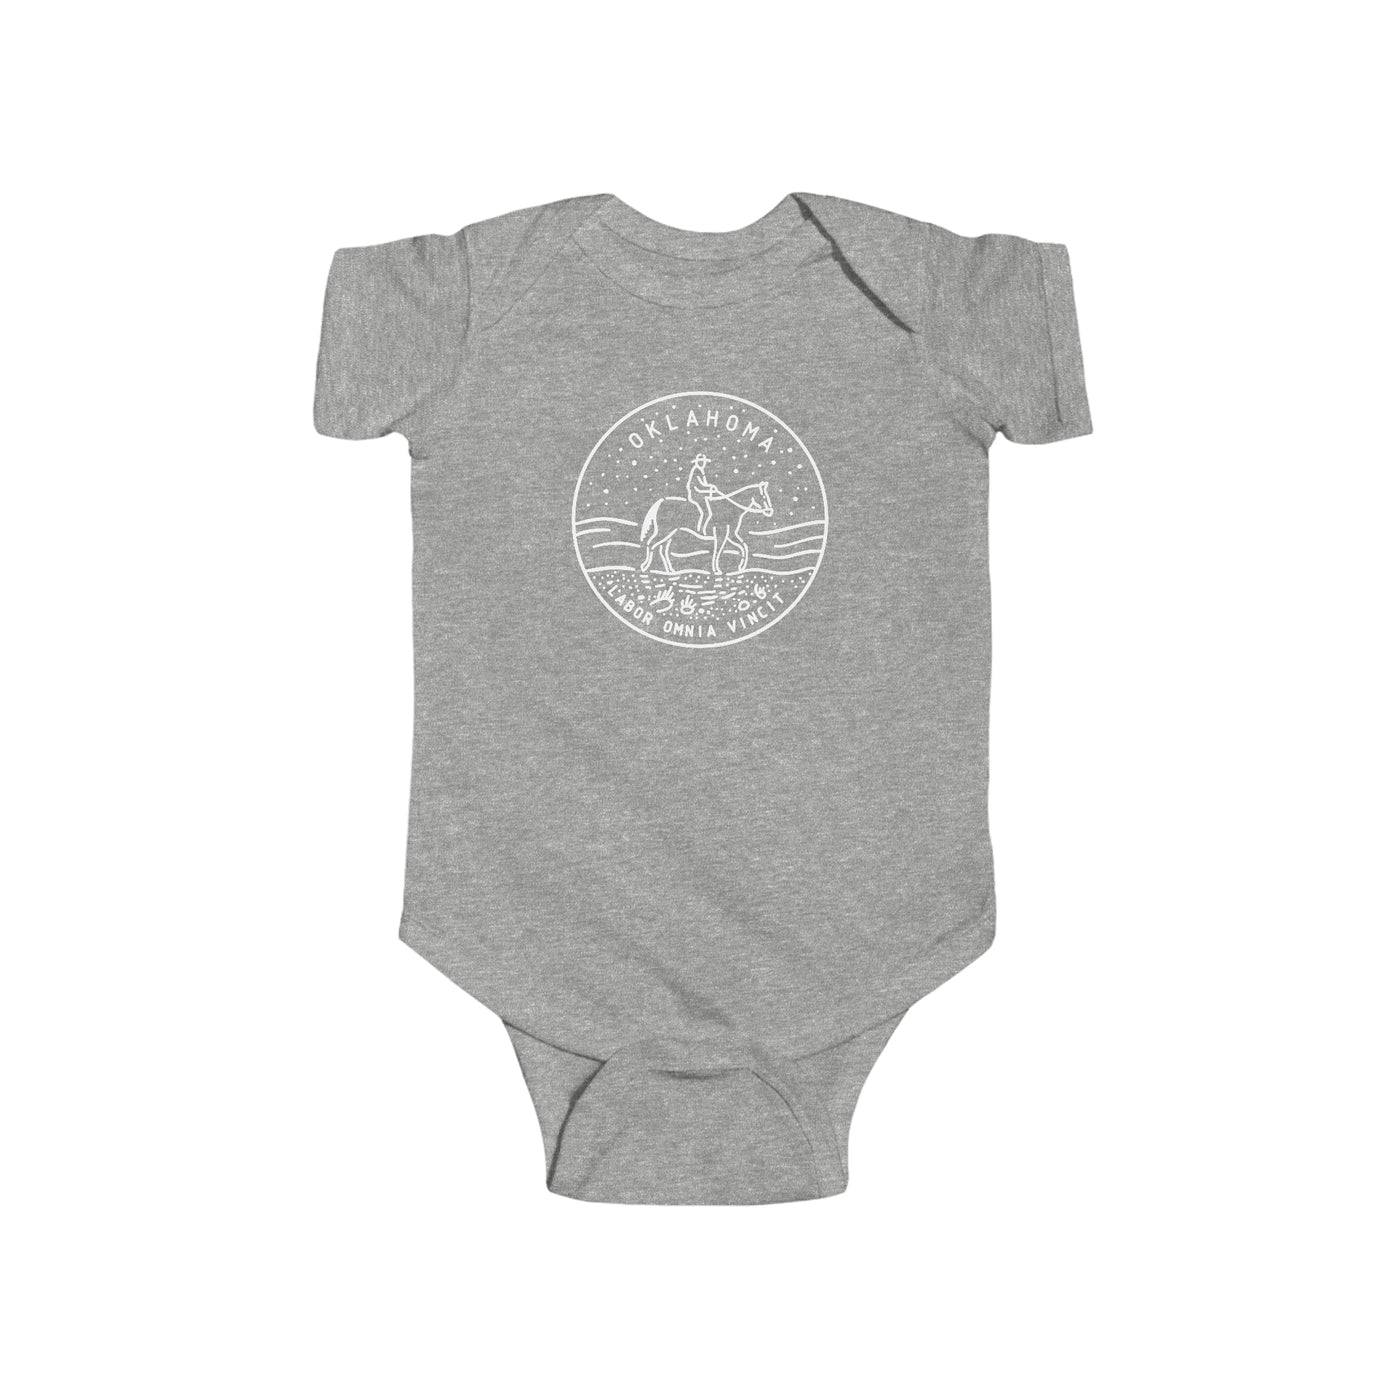 Oklahoma State Motto Baby Bodysuit